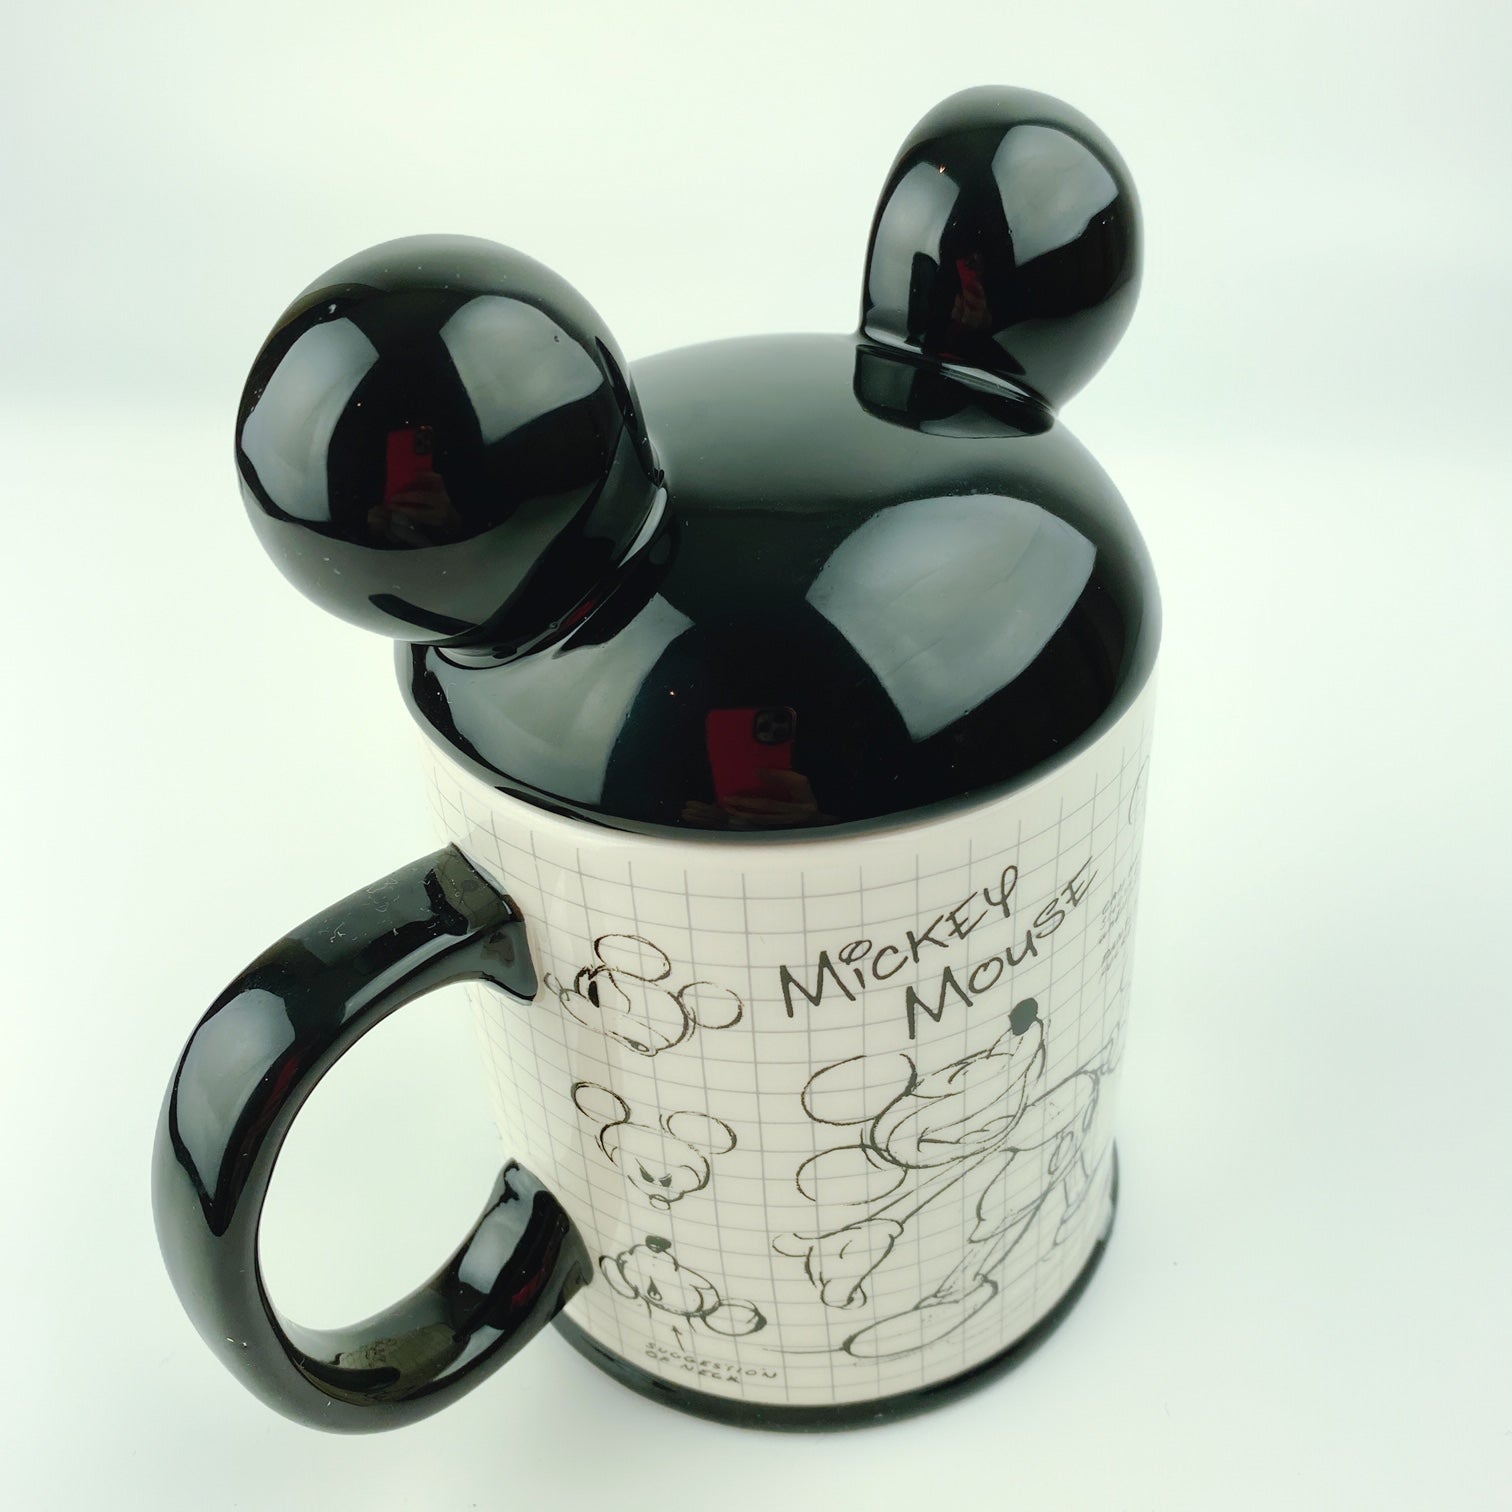 Disney Christmas Mugs / Mickey Mouse Christmas Snowglobe Holiday Coffee  Mug/ Disney Santa Suit Mickey Winter Coffee Lover Gift